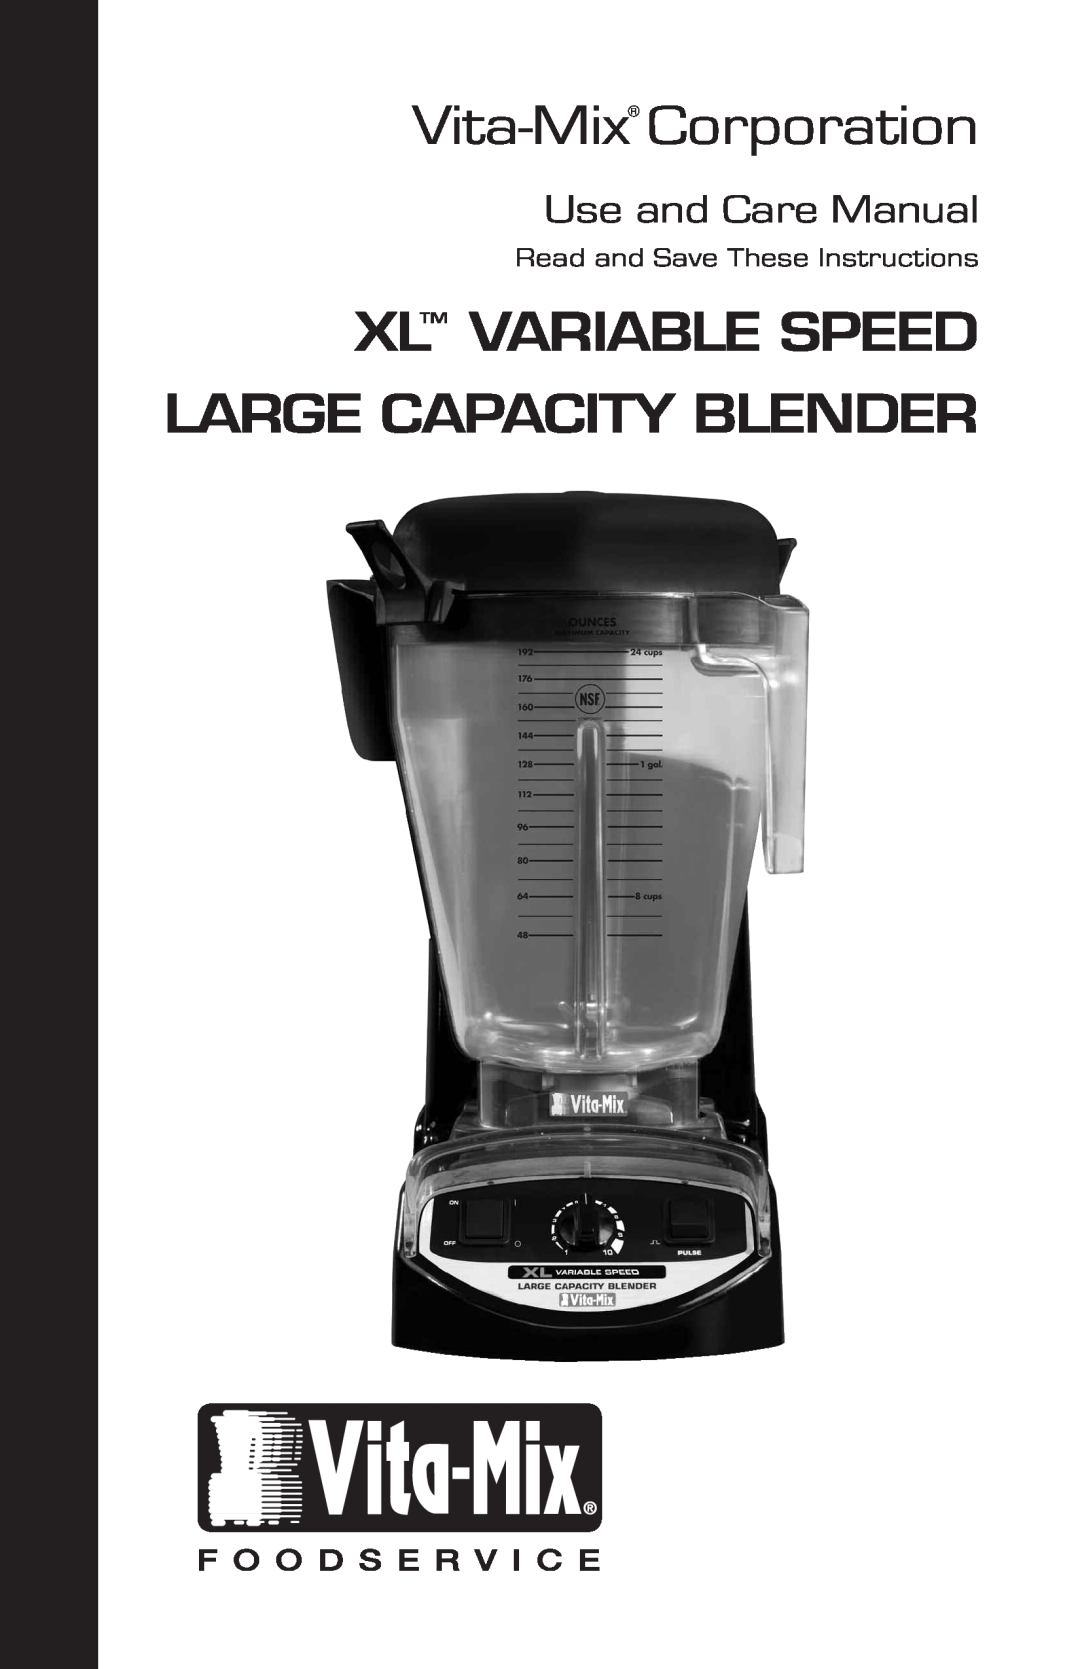 Vita-Mix VM0141 manual Vita-Mix Corporation, Xltm Variable Speed Large Capacity Blender, Use and Care Manual 